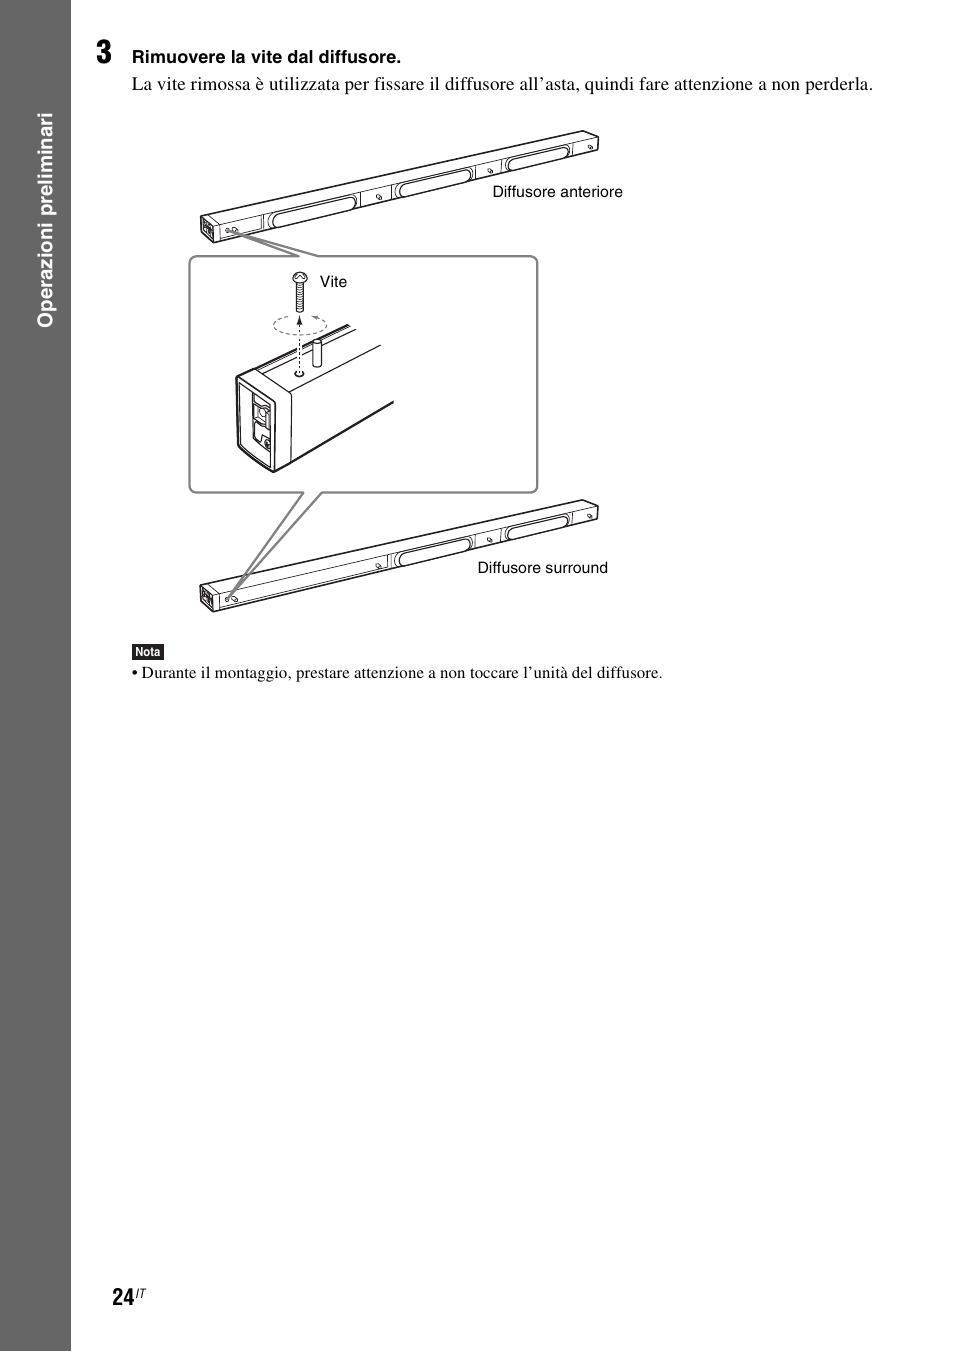 Sony BDV-IS1000 Manuale d'uso | Pagina 184 / 319